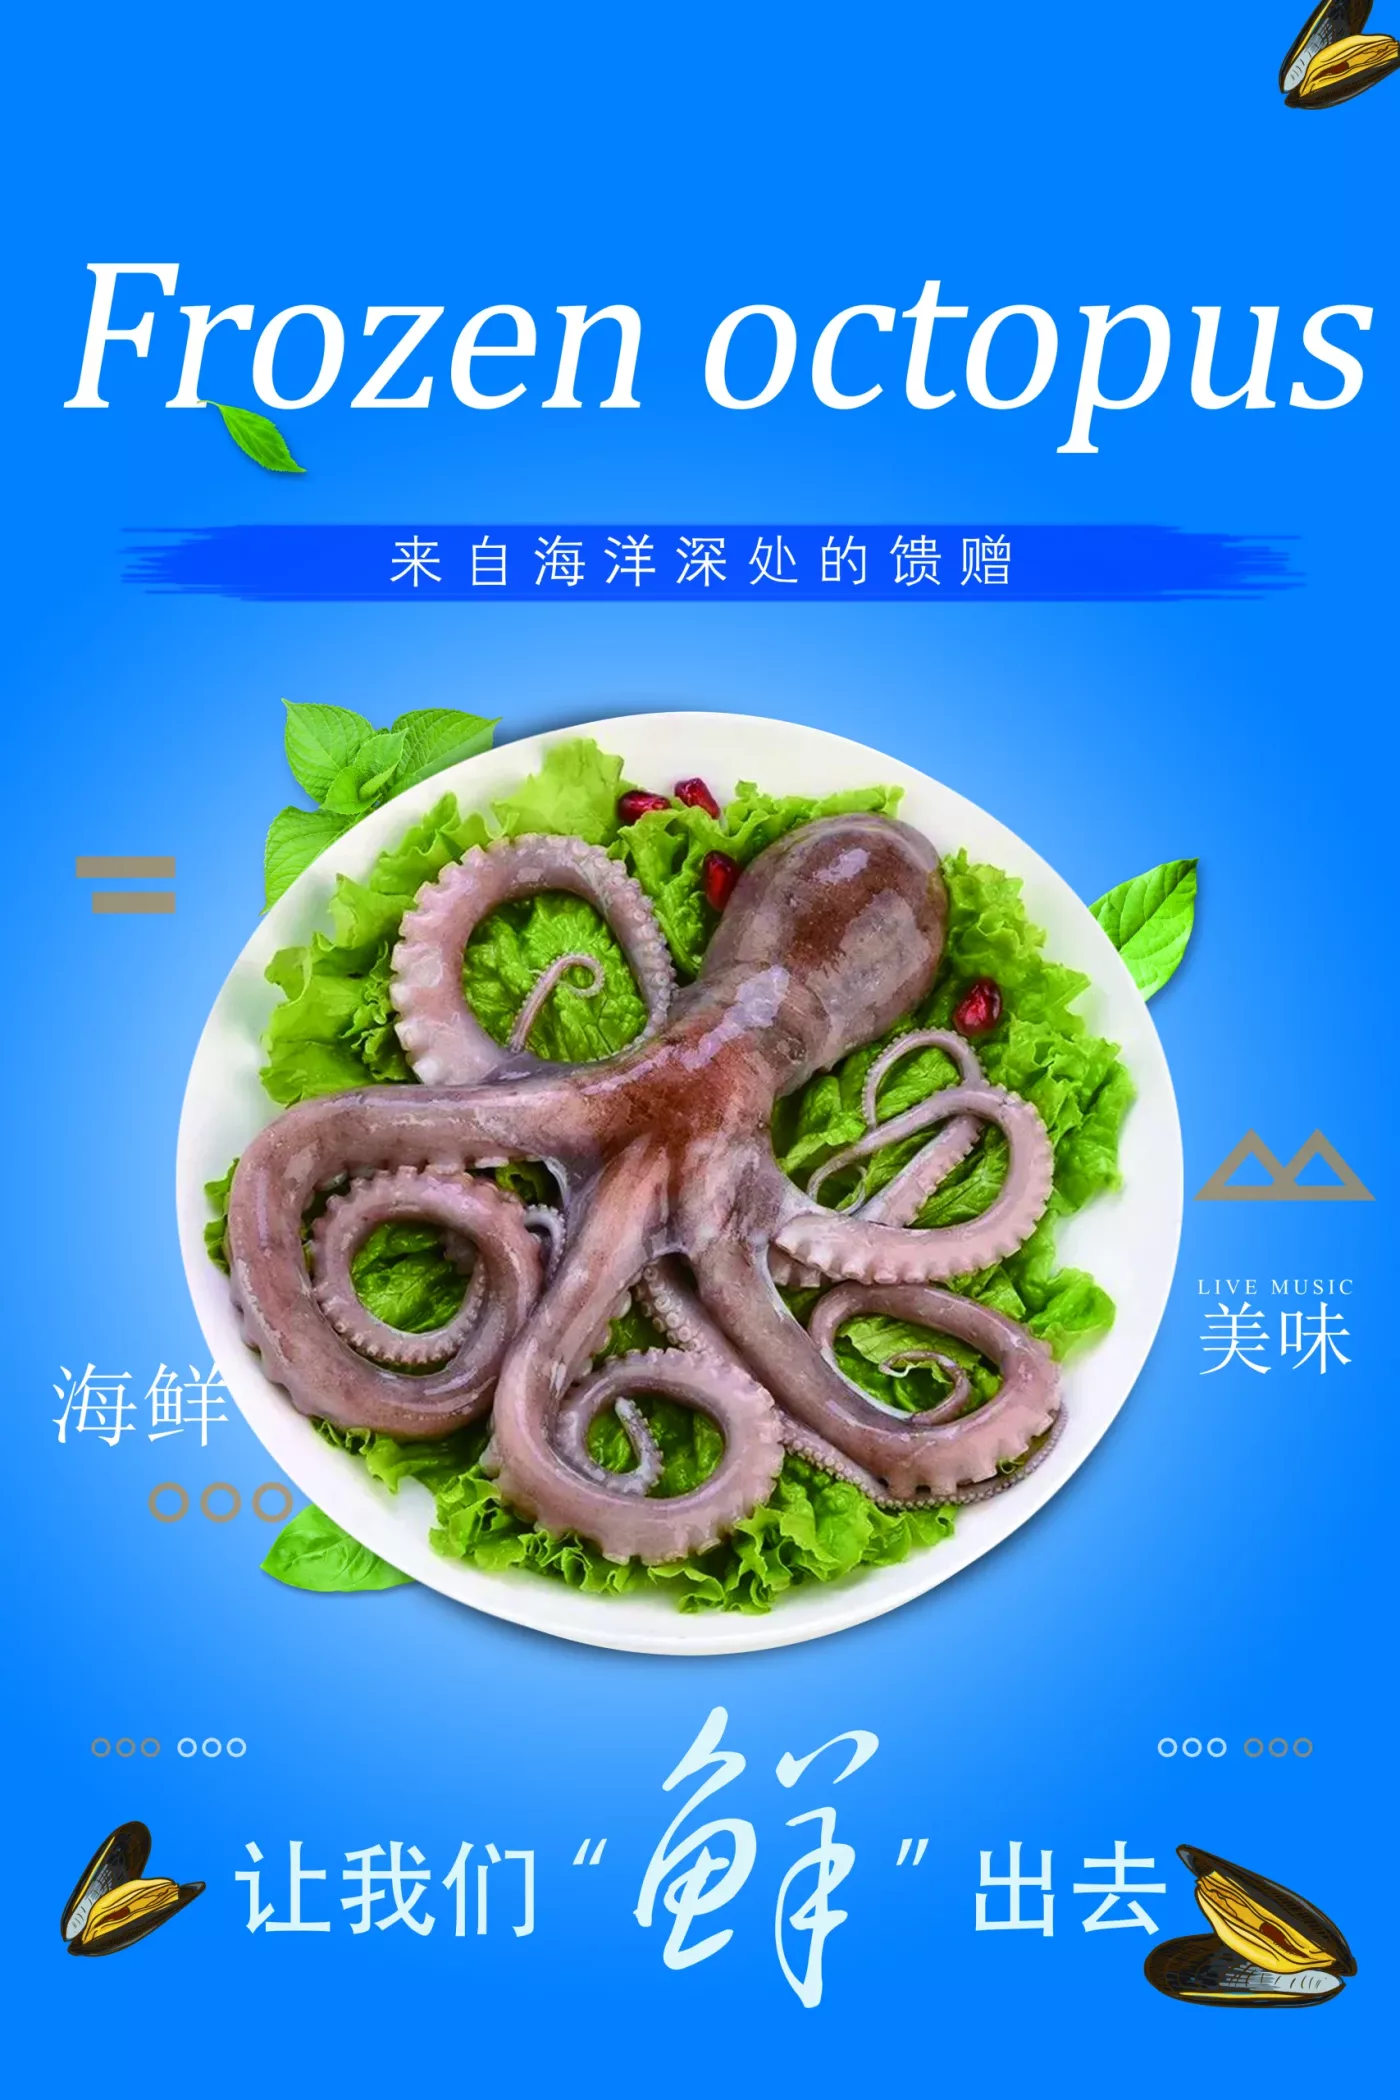 octopus sample